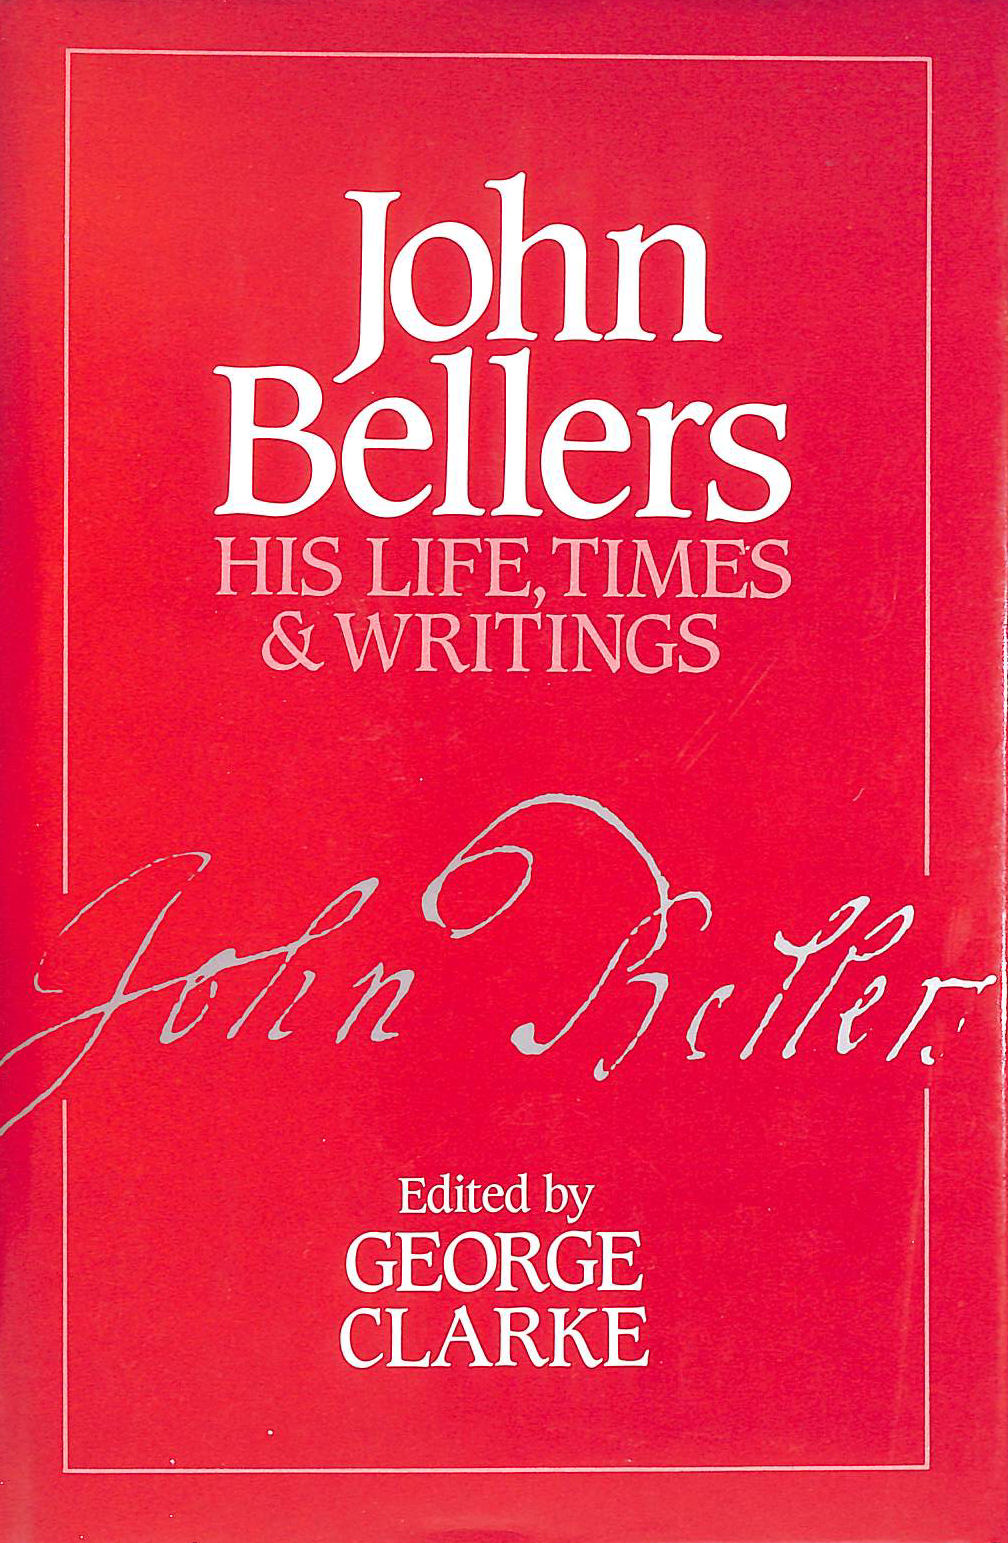 CLARKE, GEORGE [EDITOR] - John Bellers